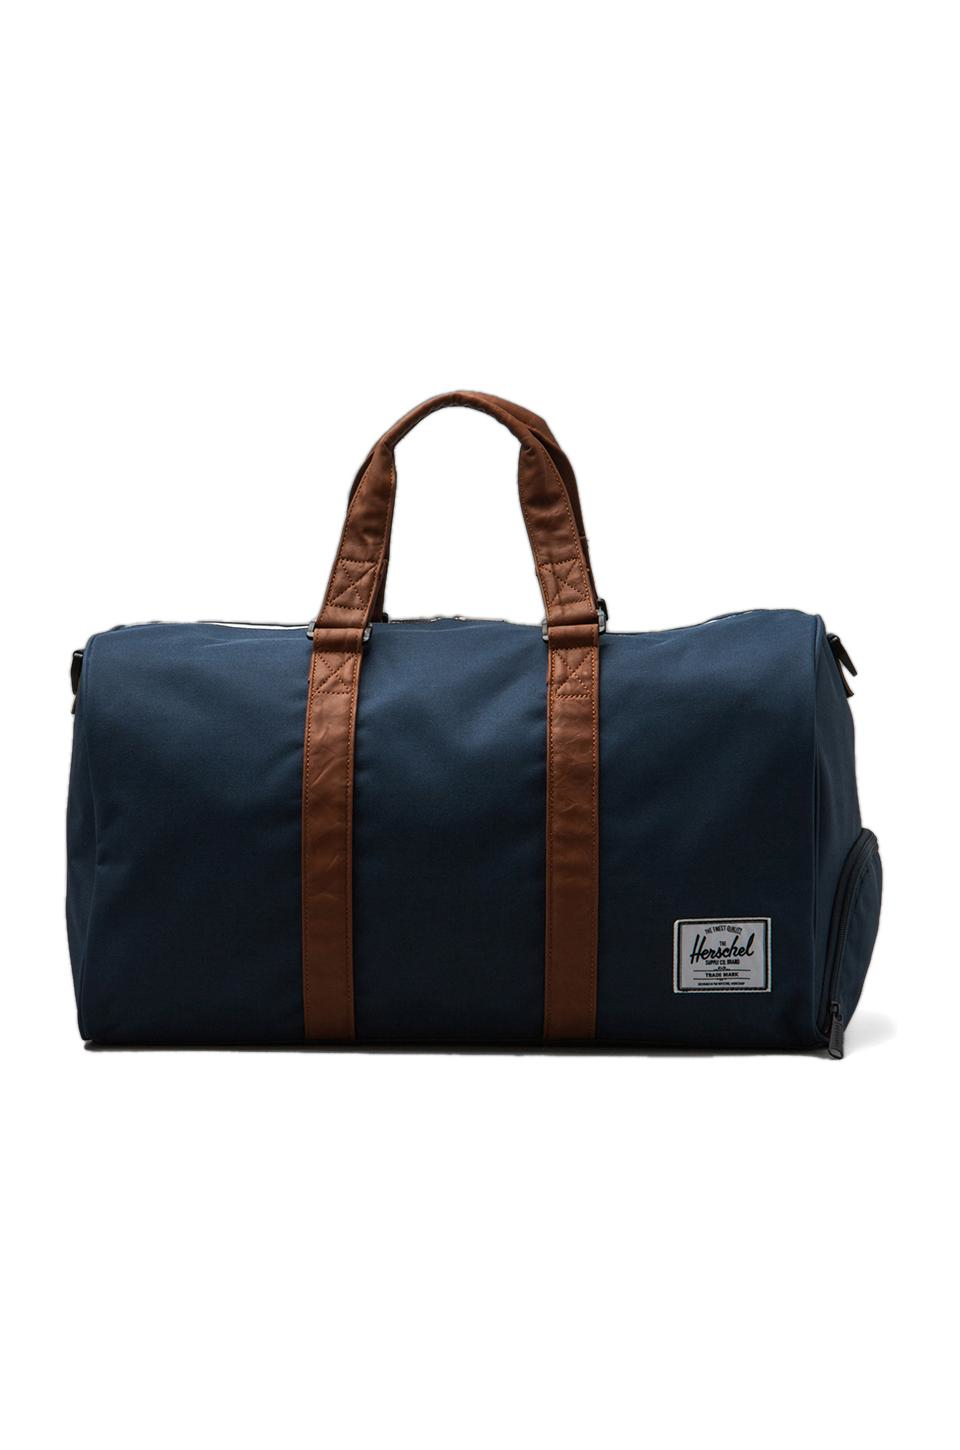 Lyst - Herschel Supply Co. Novel Duffle Bag in Blue